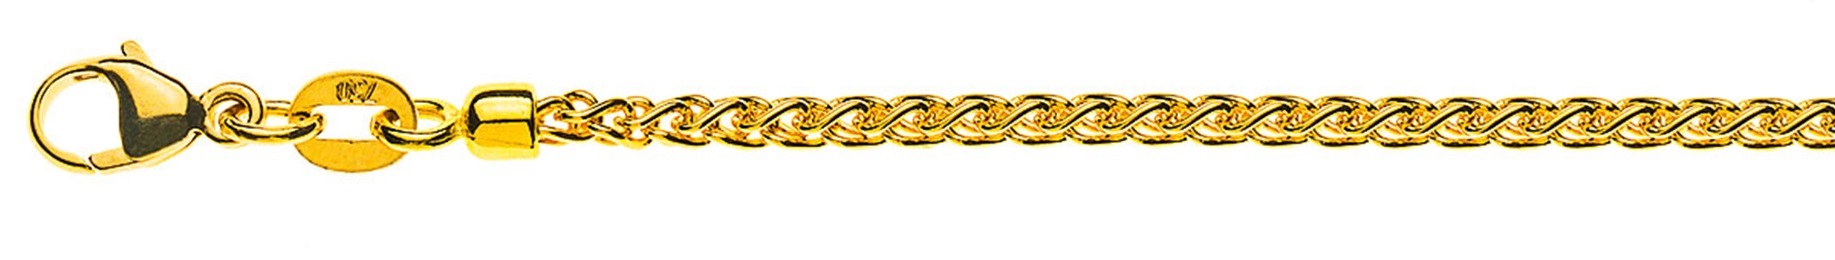 AURONOS Prestige Collier en or jaune 18K torsadé 42cm 2.15mm